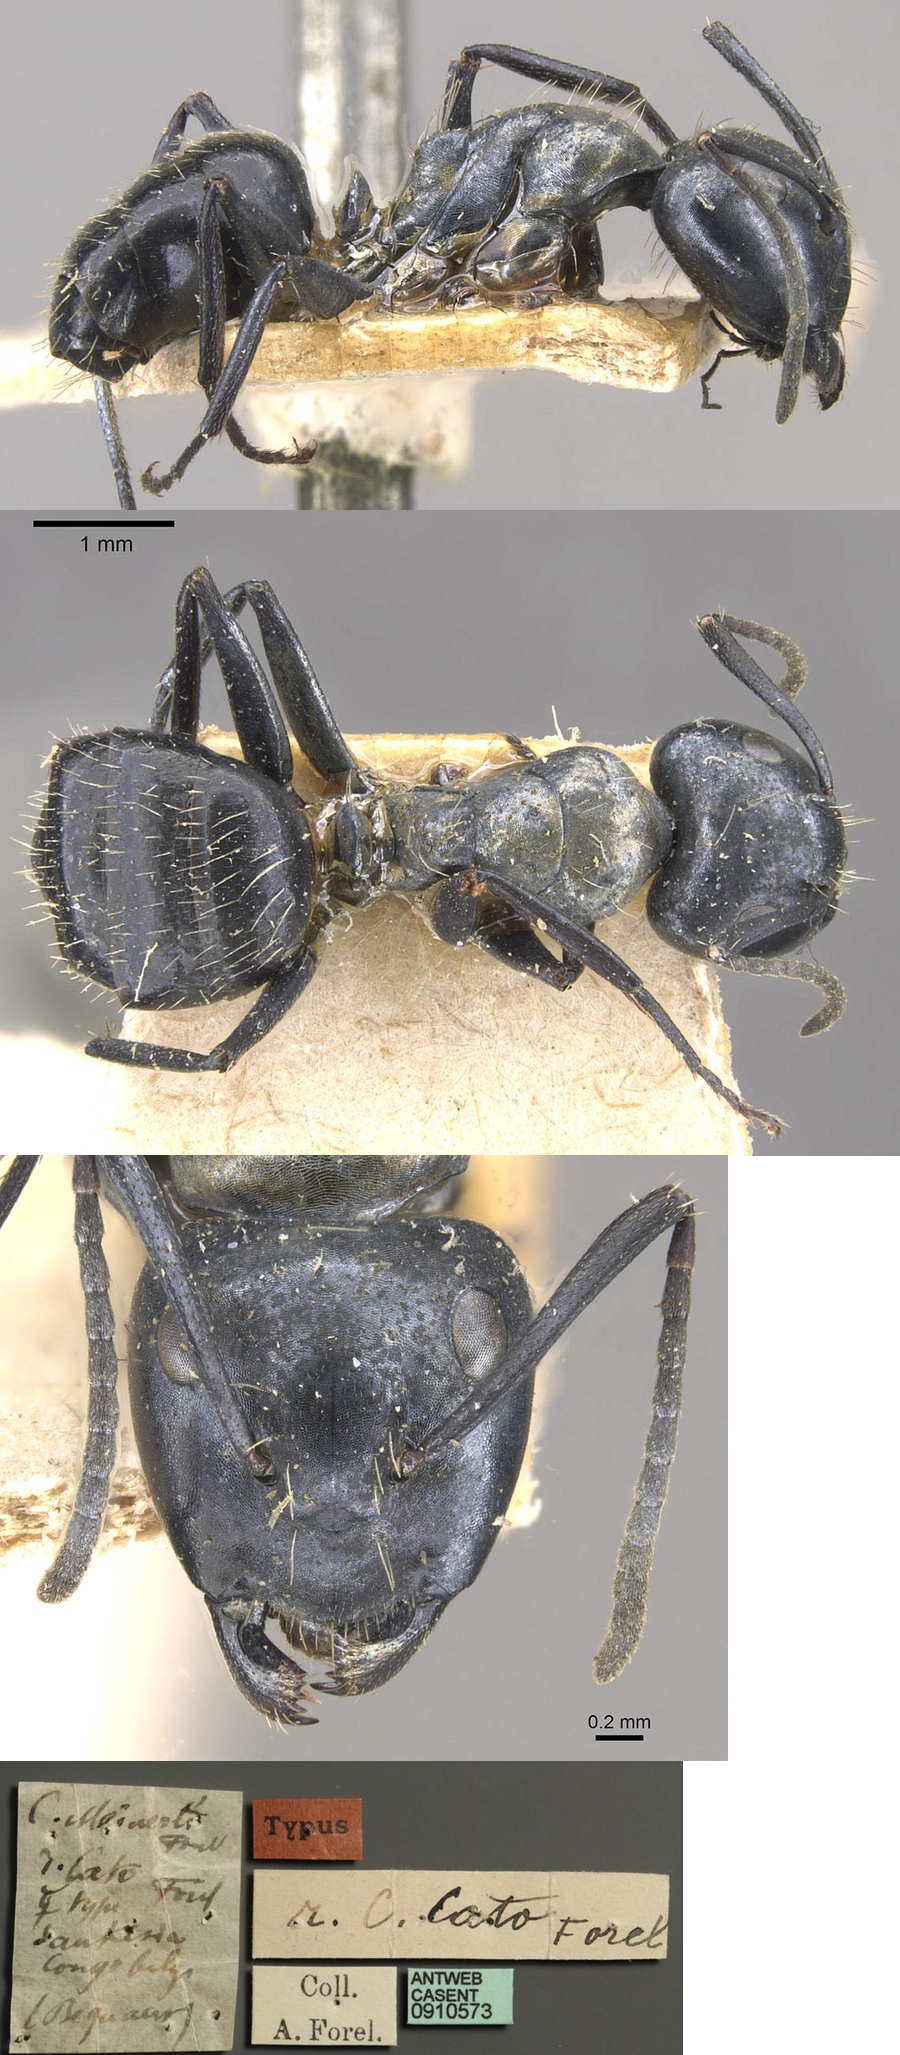 Camponotus vividus cato major